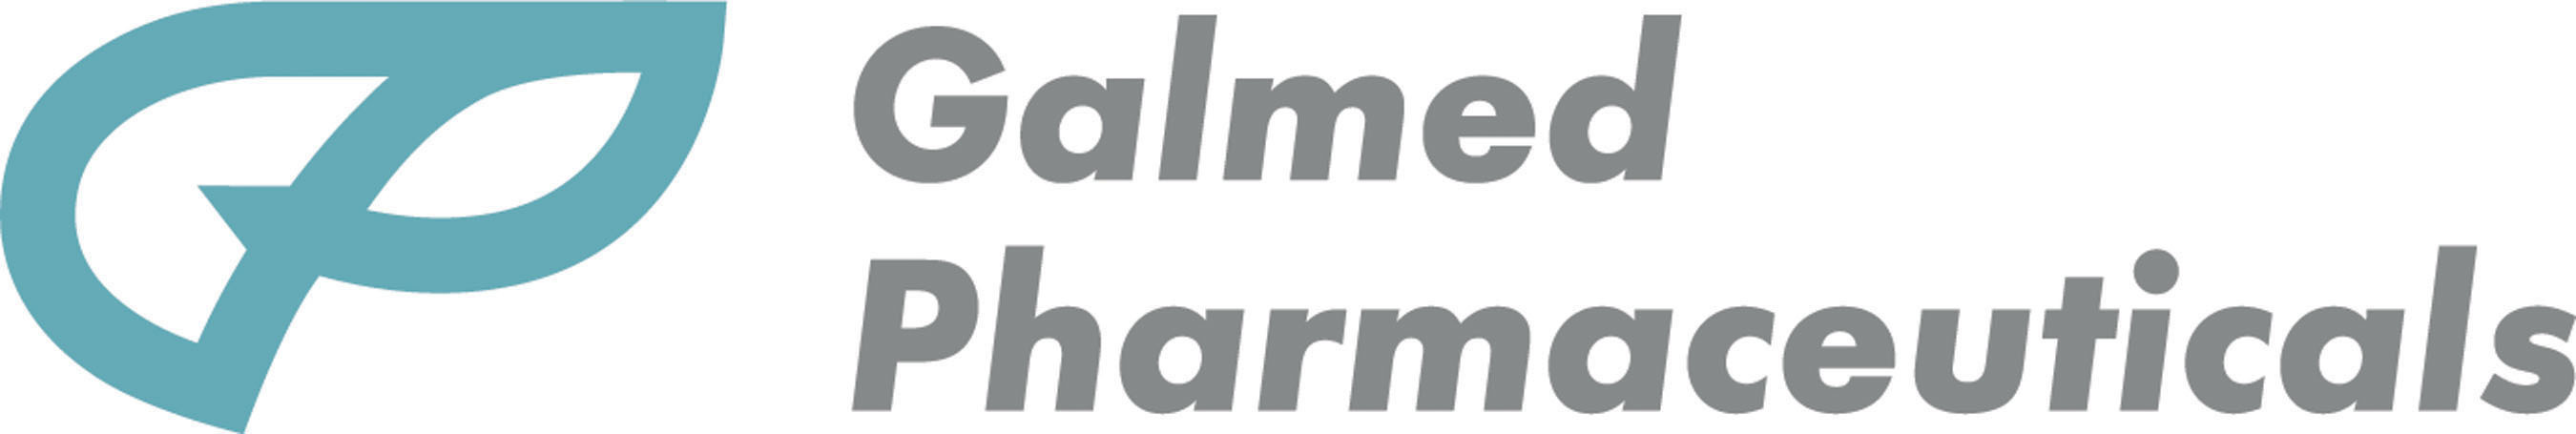 Galmed Pharmaceuticals, Ltd. (PRNewsFoto/Galmed Pharmaceuticals, Ltd) (PRNewsFoto/GALMED PHARMACEUTICALS, LTD)